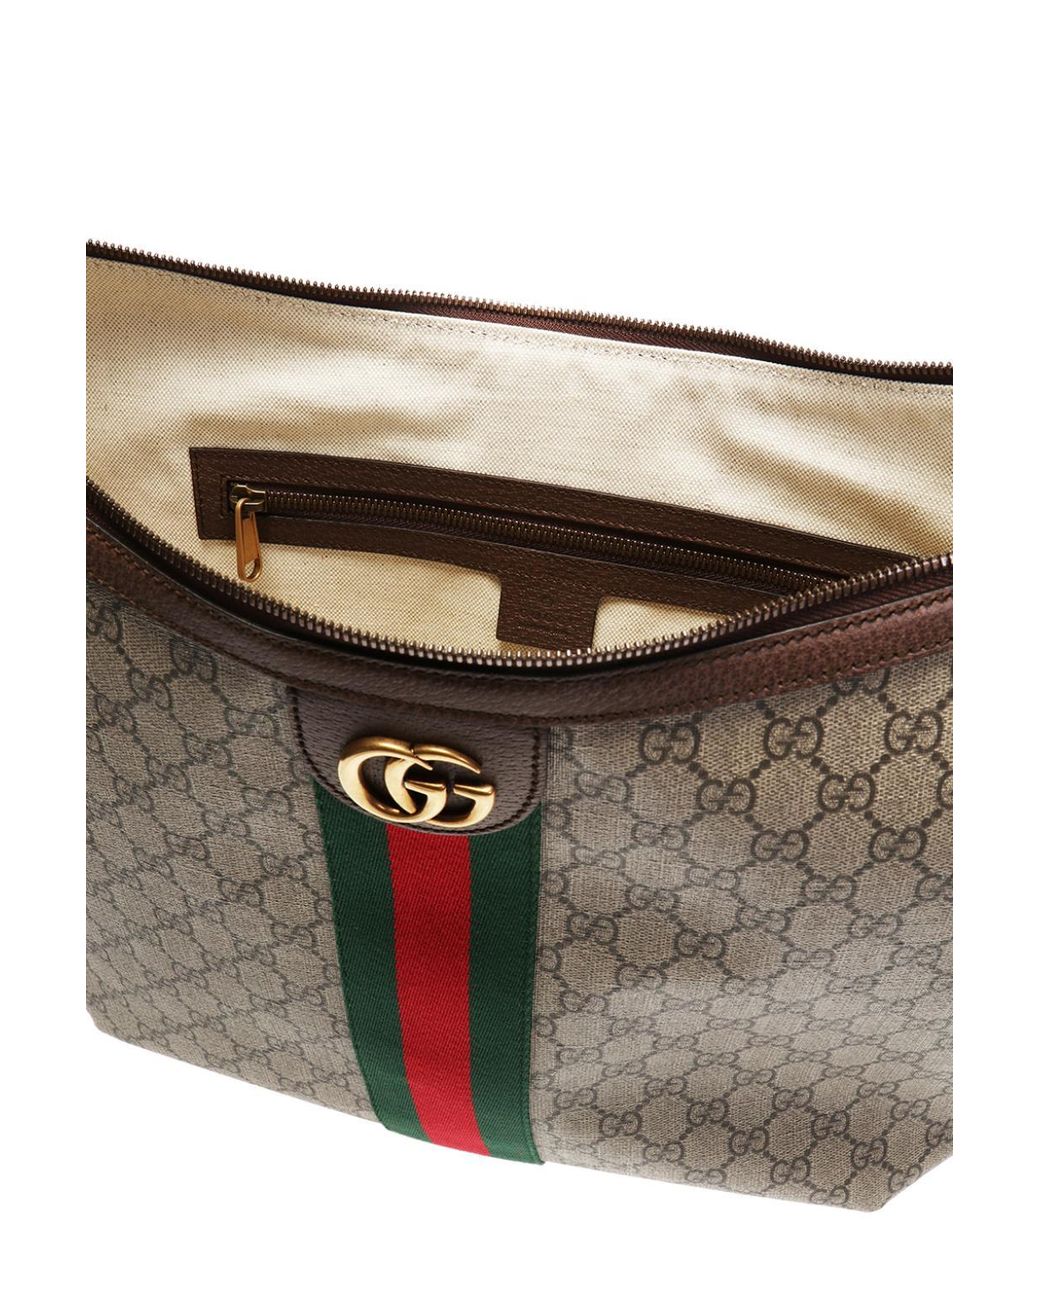 Gucci 'ophidia' Shoulder Bag in Brown